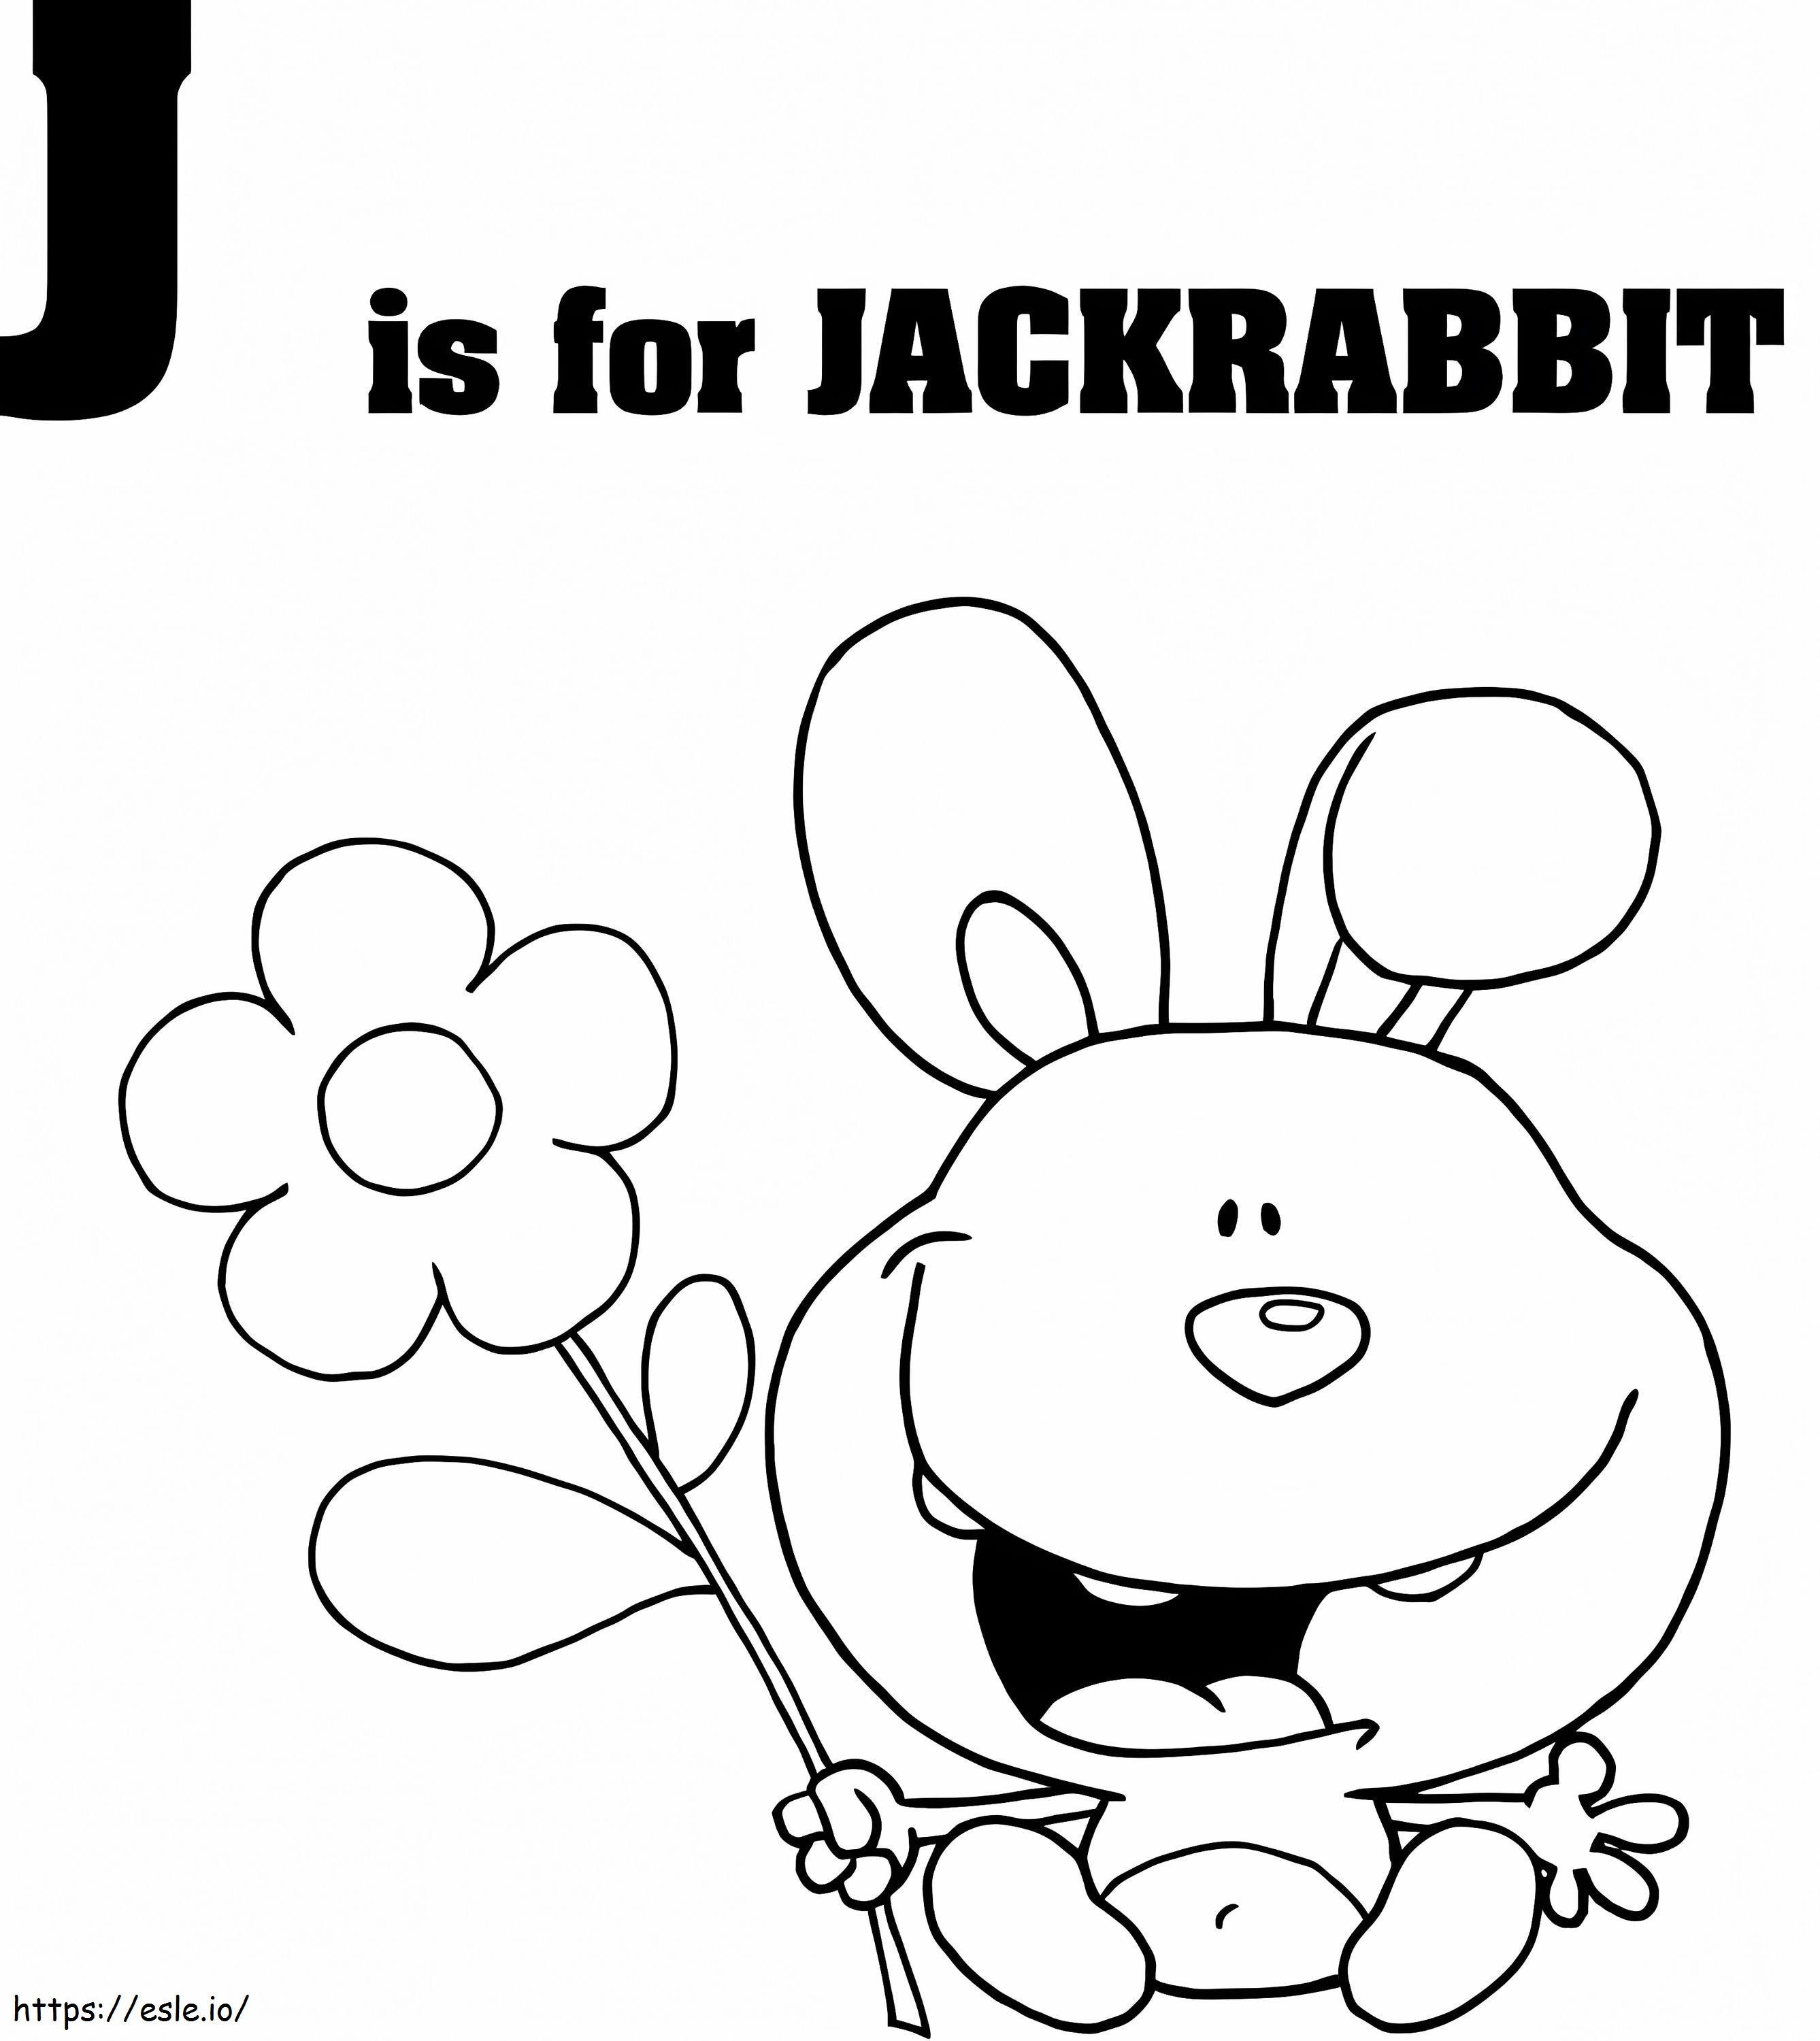 Jackrabbit Letter J coloring page